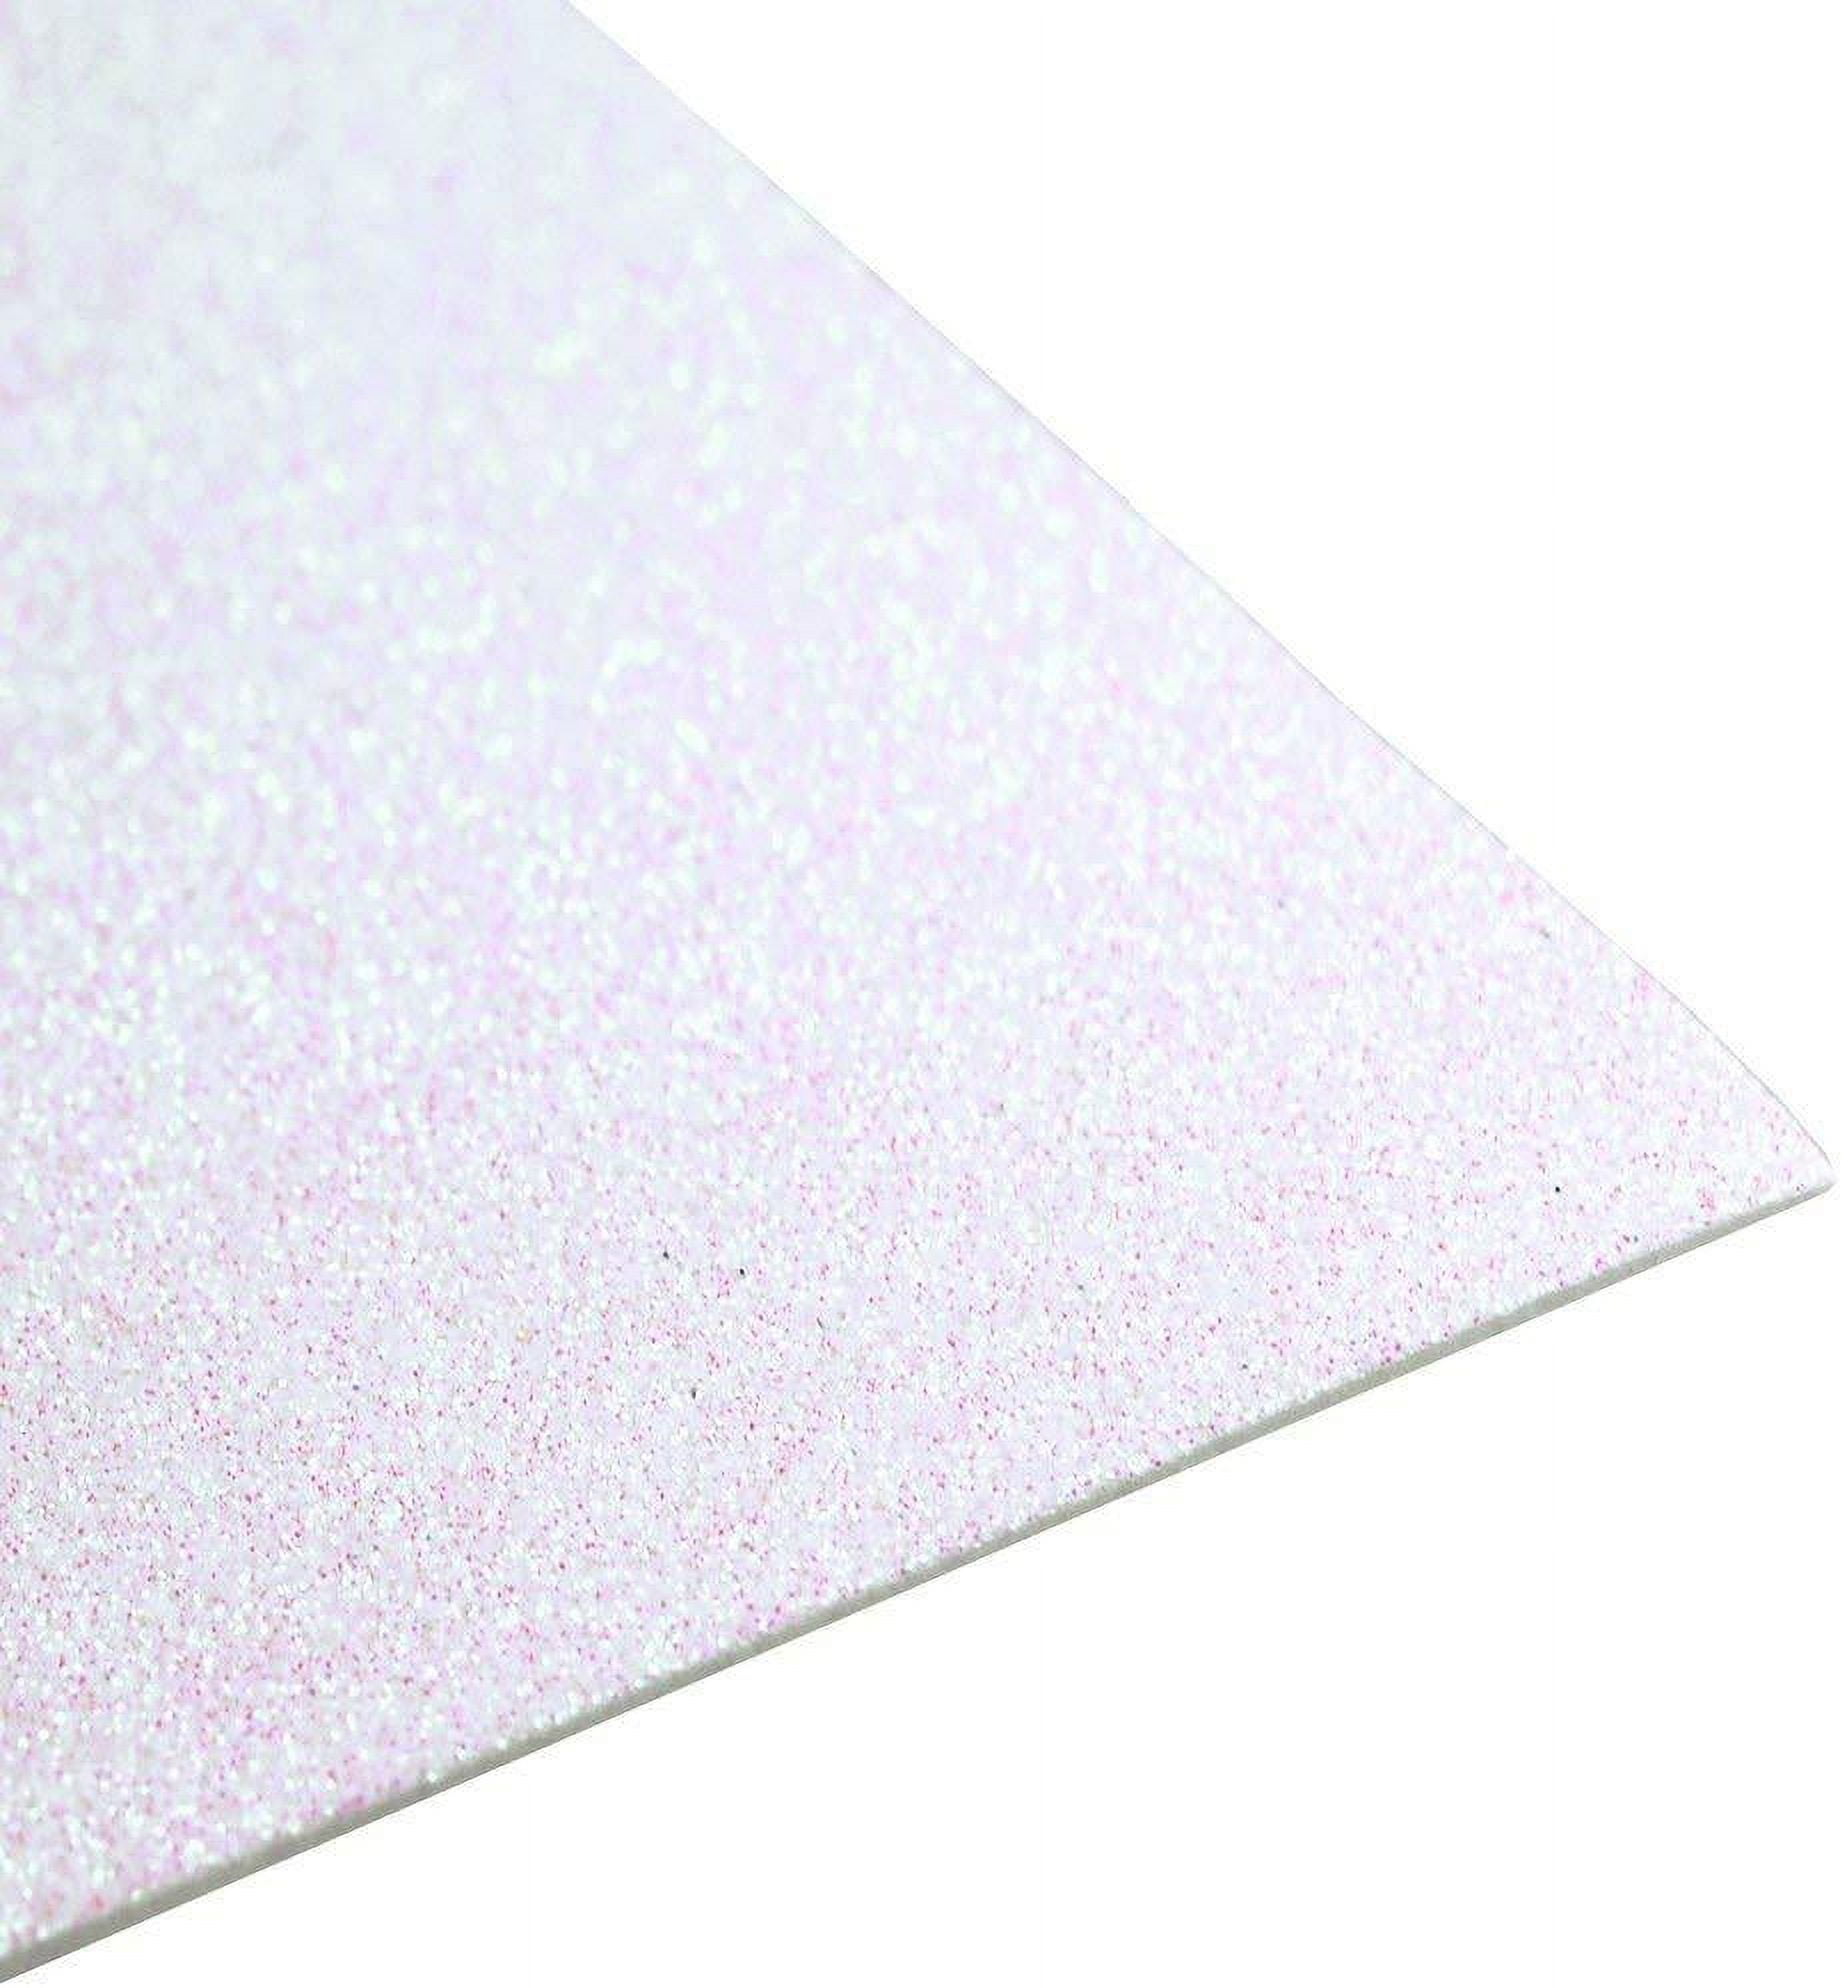 WYOMER Large White Foam Sheets Roll, EVA Foam Sheet India